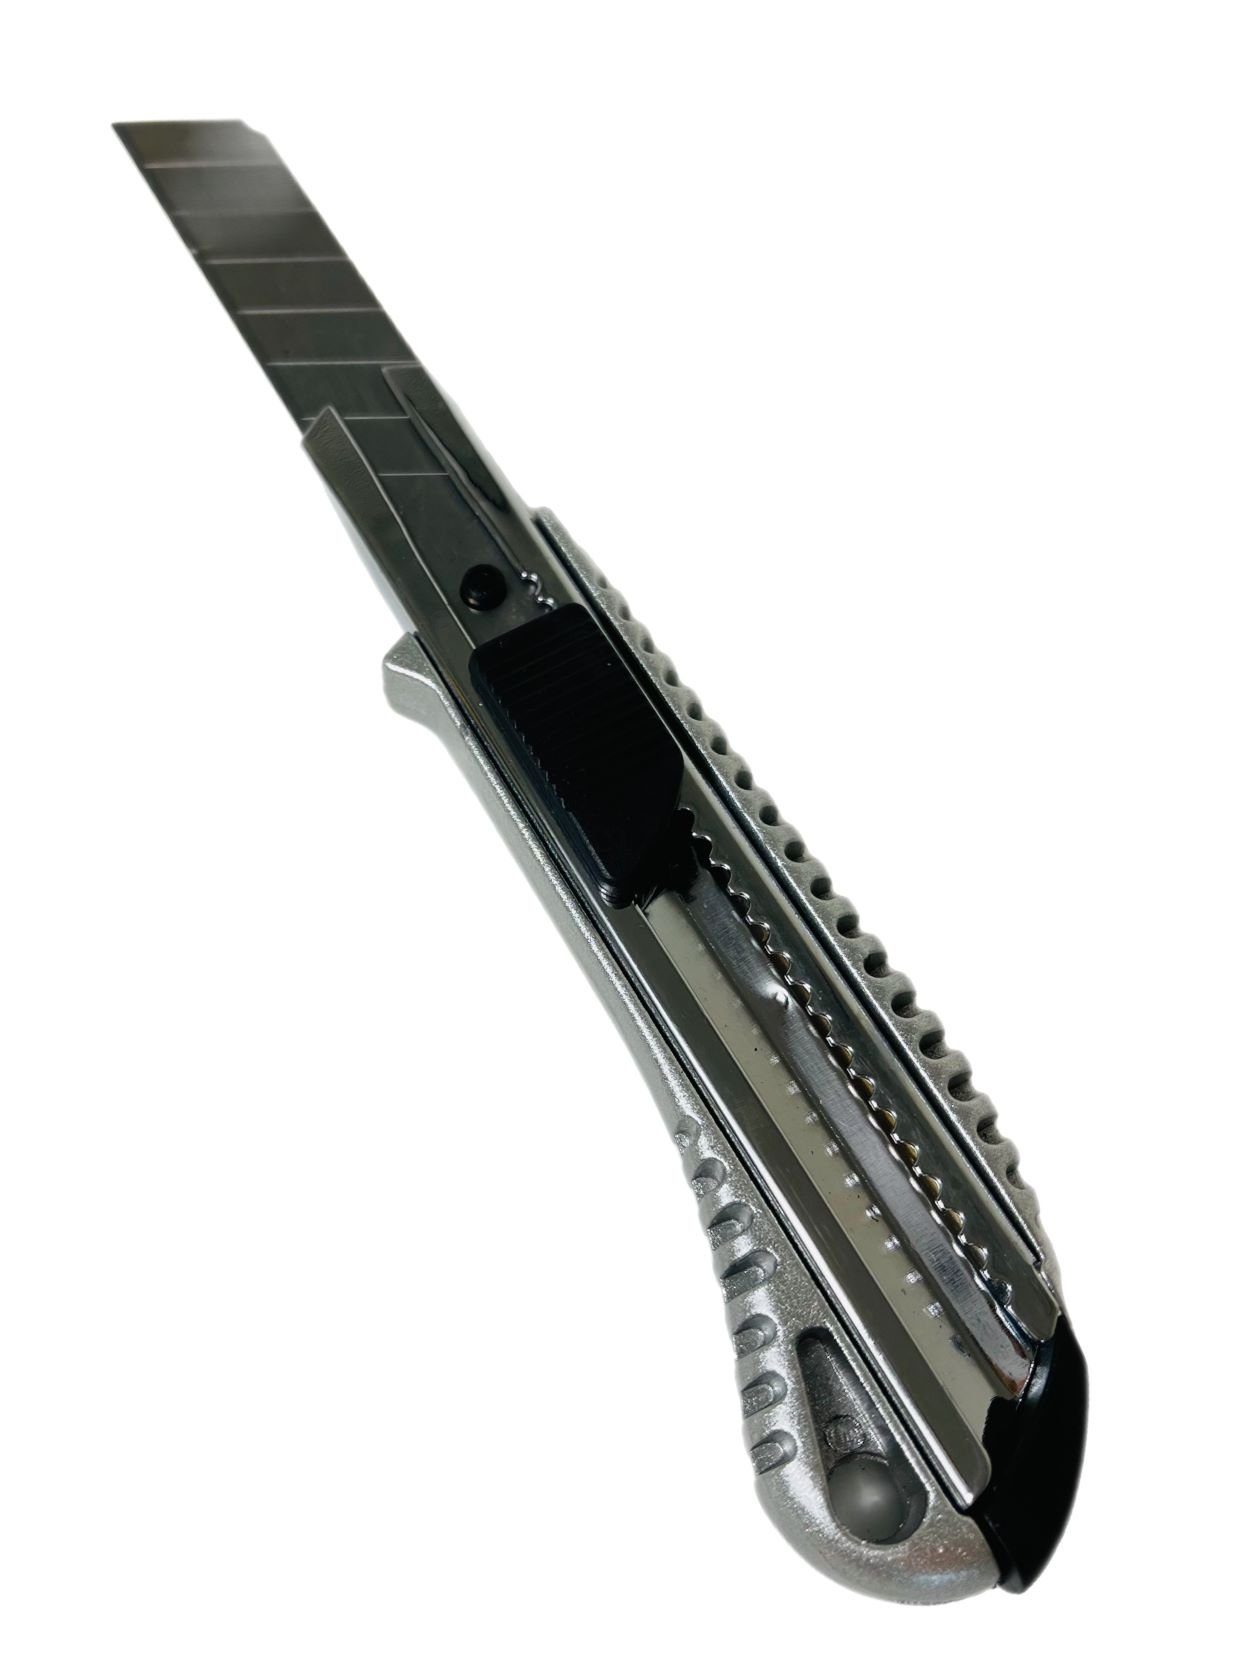 VaGo-Tools Teppichmesser 144x Teppichmesser Cuttermesser Cutter Druckguss 18mm Alu Paketmesser